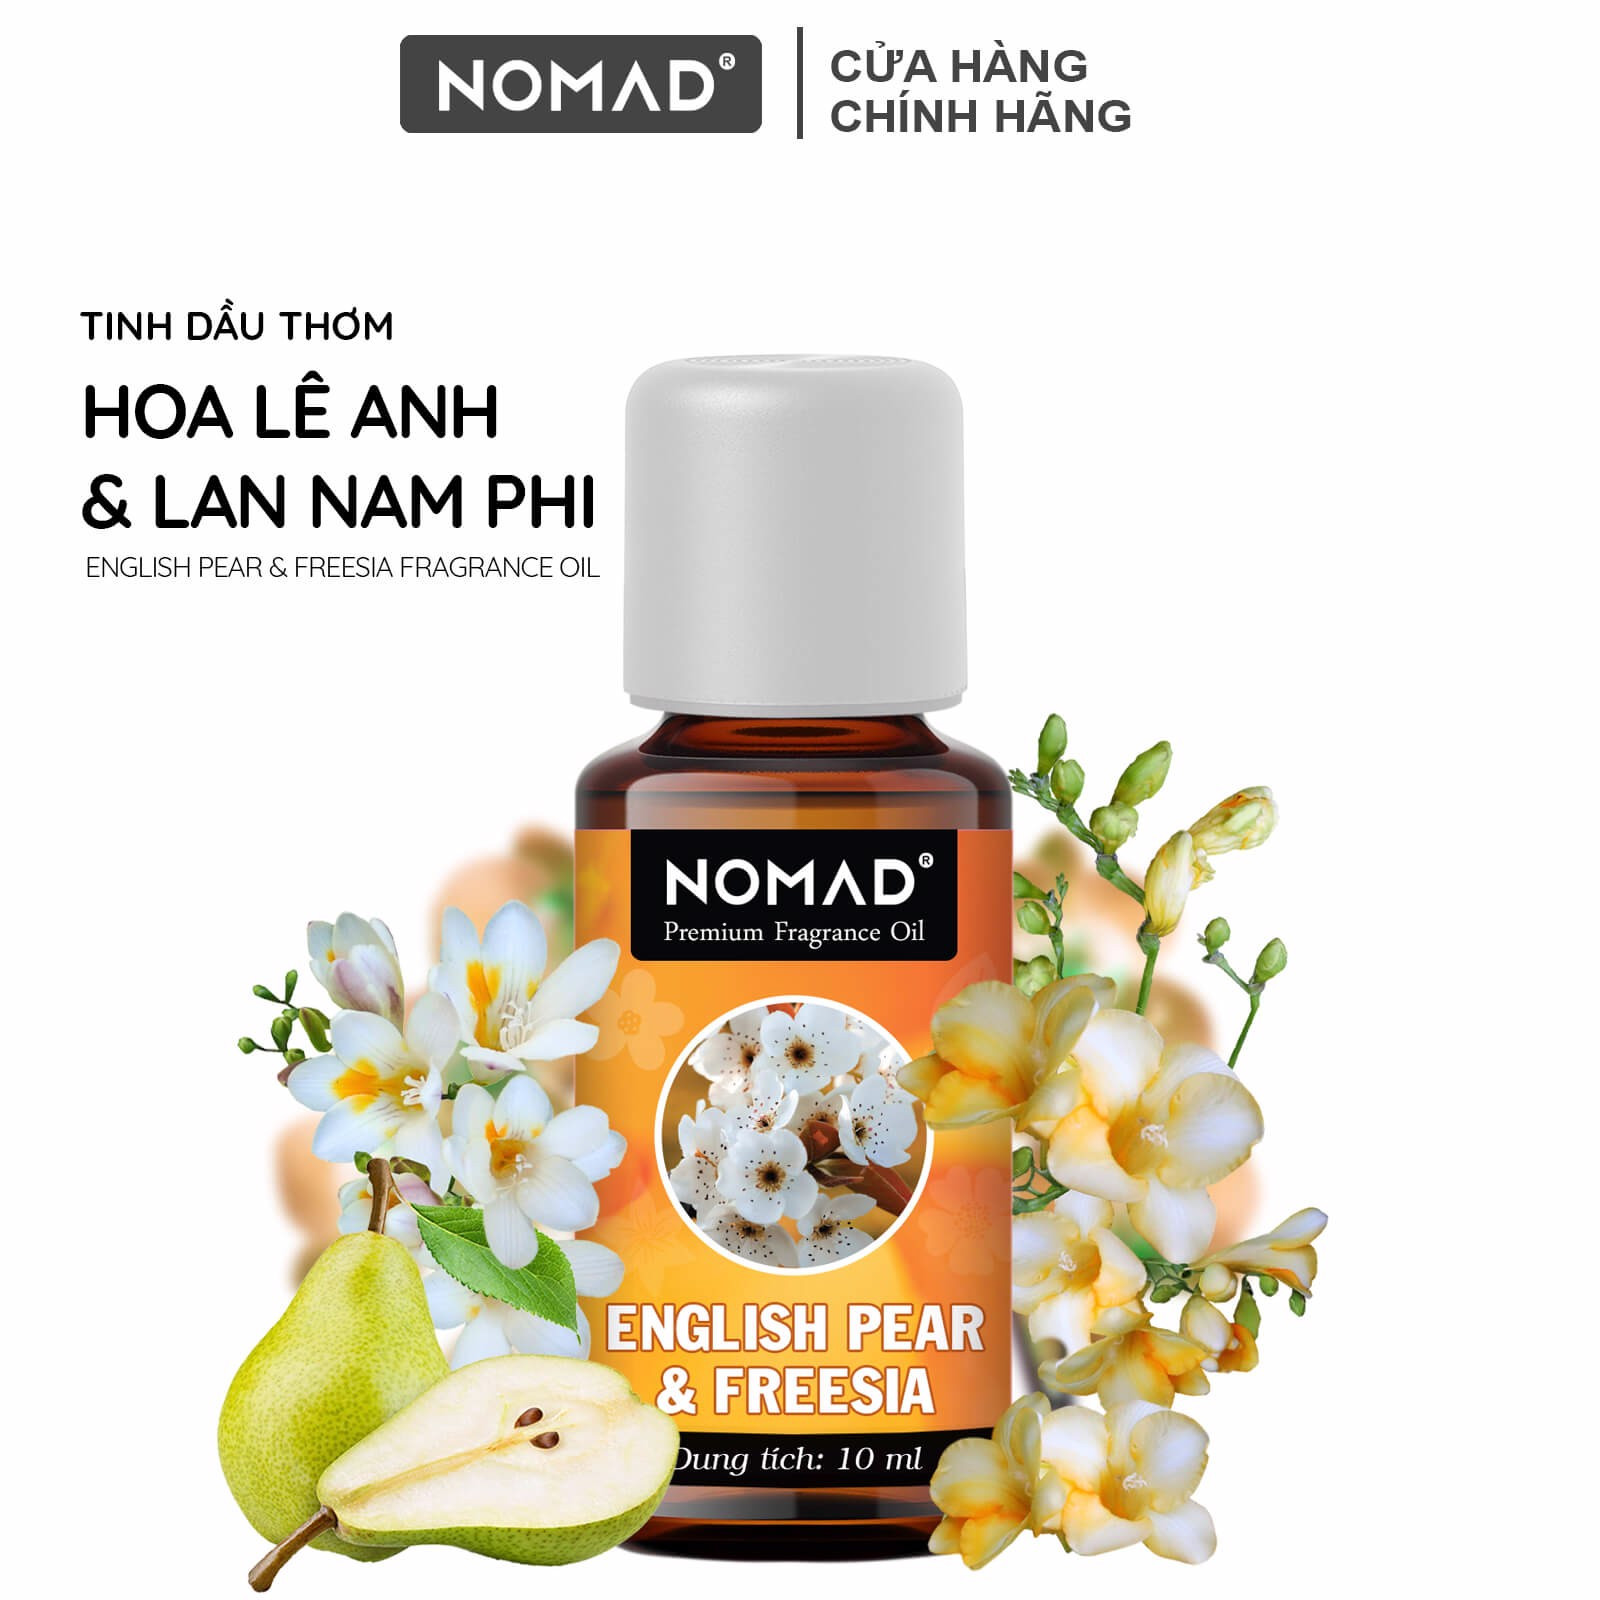 Tinh Dầu Thơm Nomad Premium Fragrance Oil - English Pear & Freesia